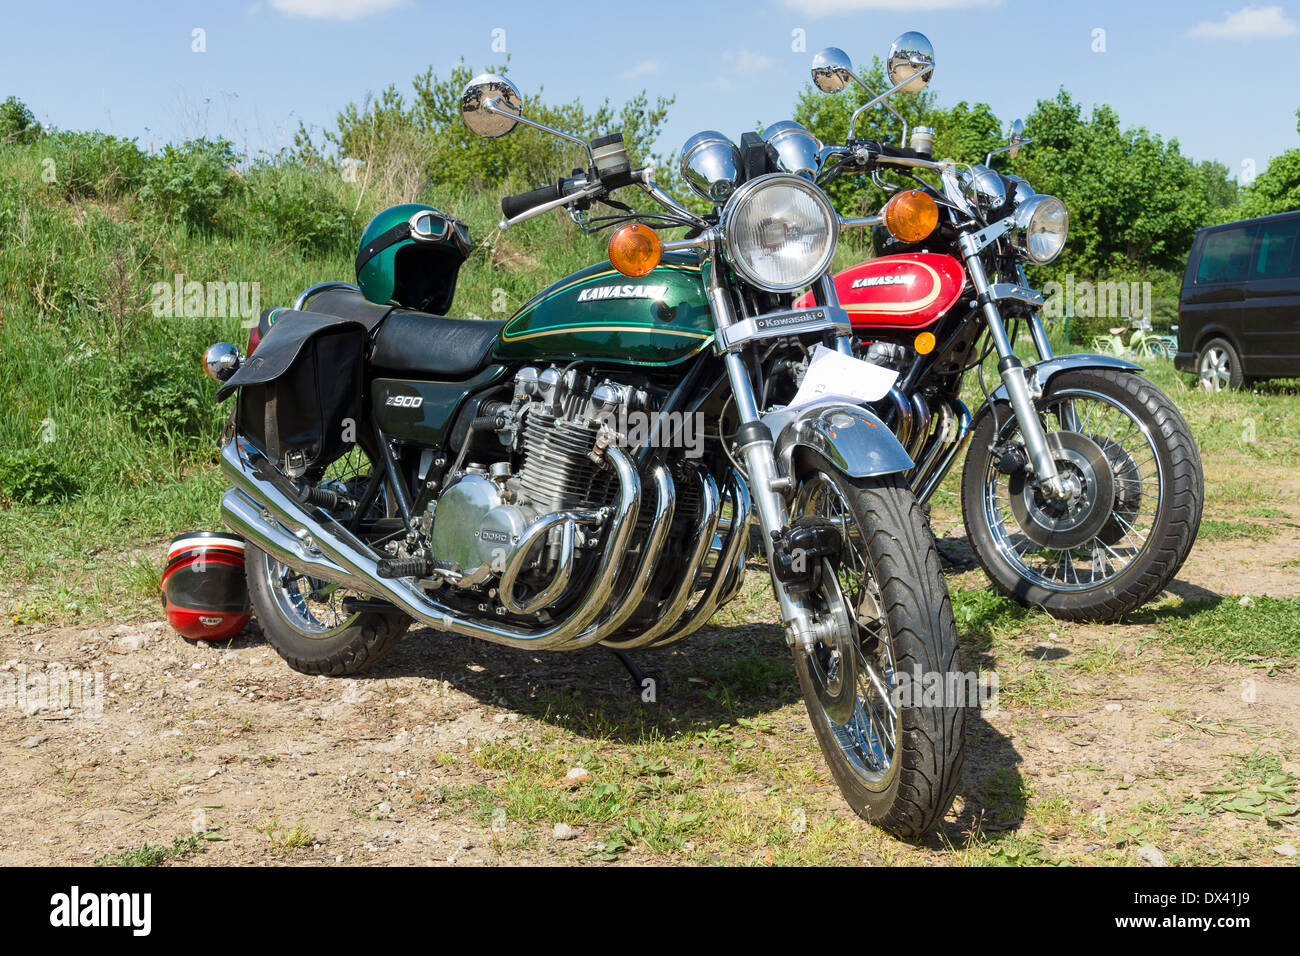 Kawasaki z900 oldtimer motorcycle hi-res stock photography and images -  Alamy